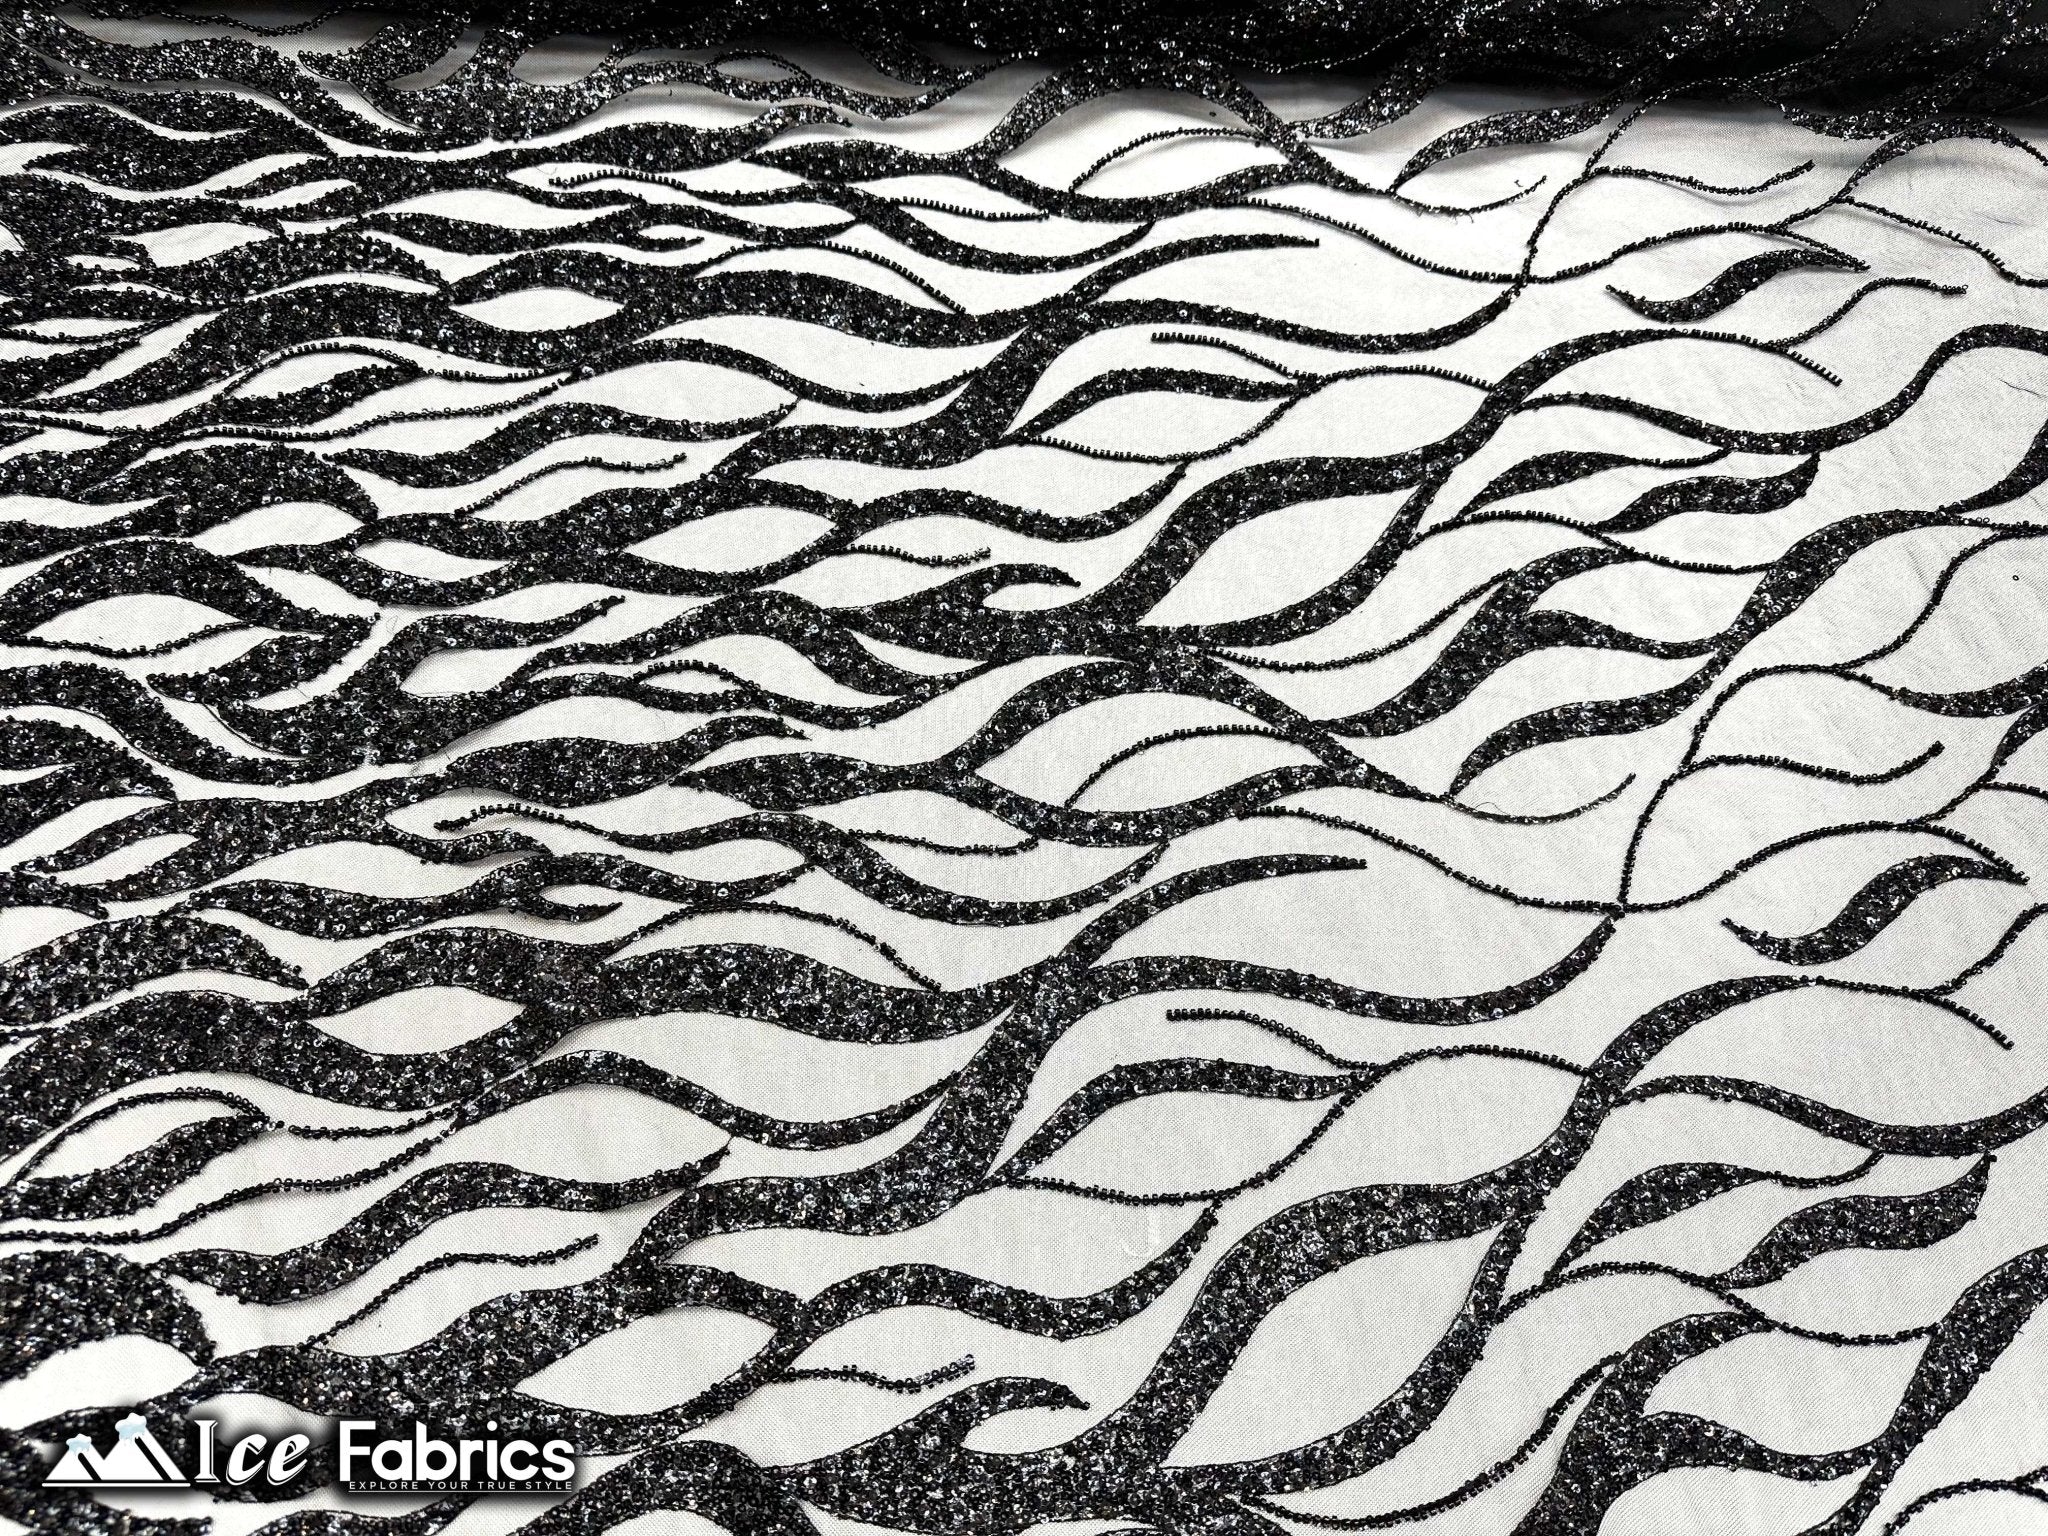 Elegant Heavy Beaded Fabric Lace Fabric with SequinICE FABRICSICE FABRICSBlackBy The Yard (54" Wide)Elegant Heavy Beaded Fabric Lace Fabric with Sequin ICE FABRICS Black